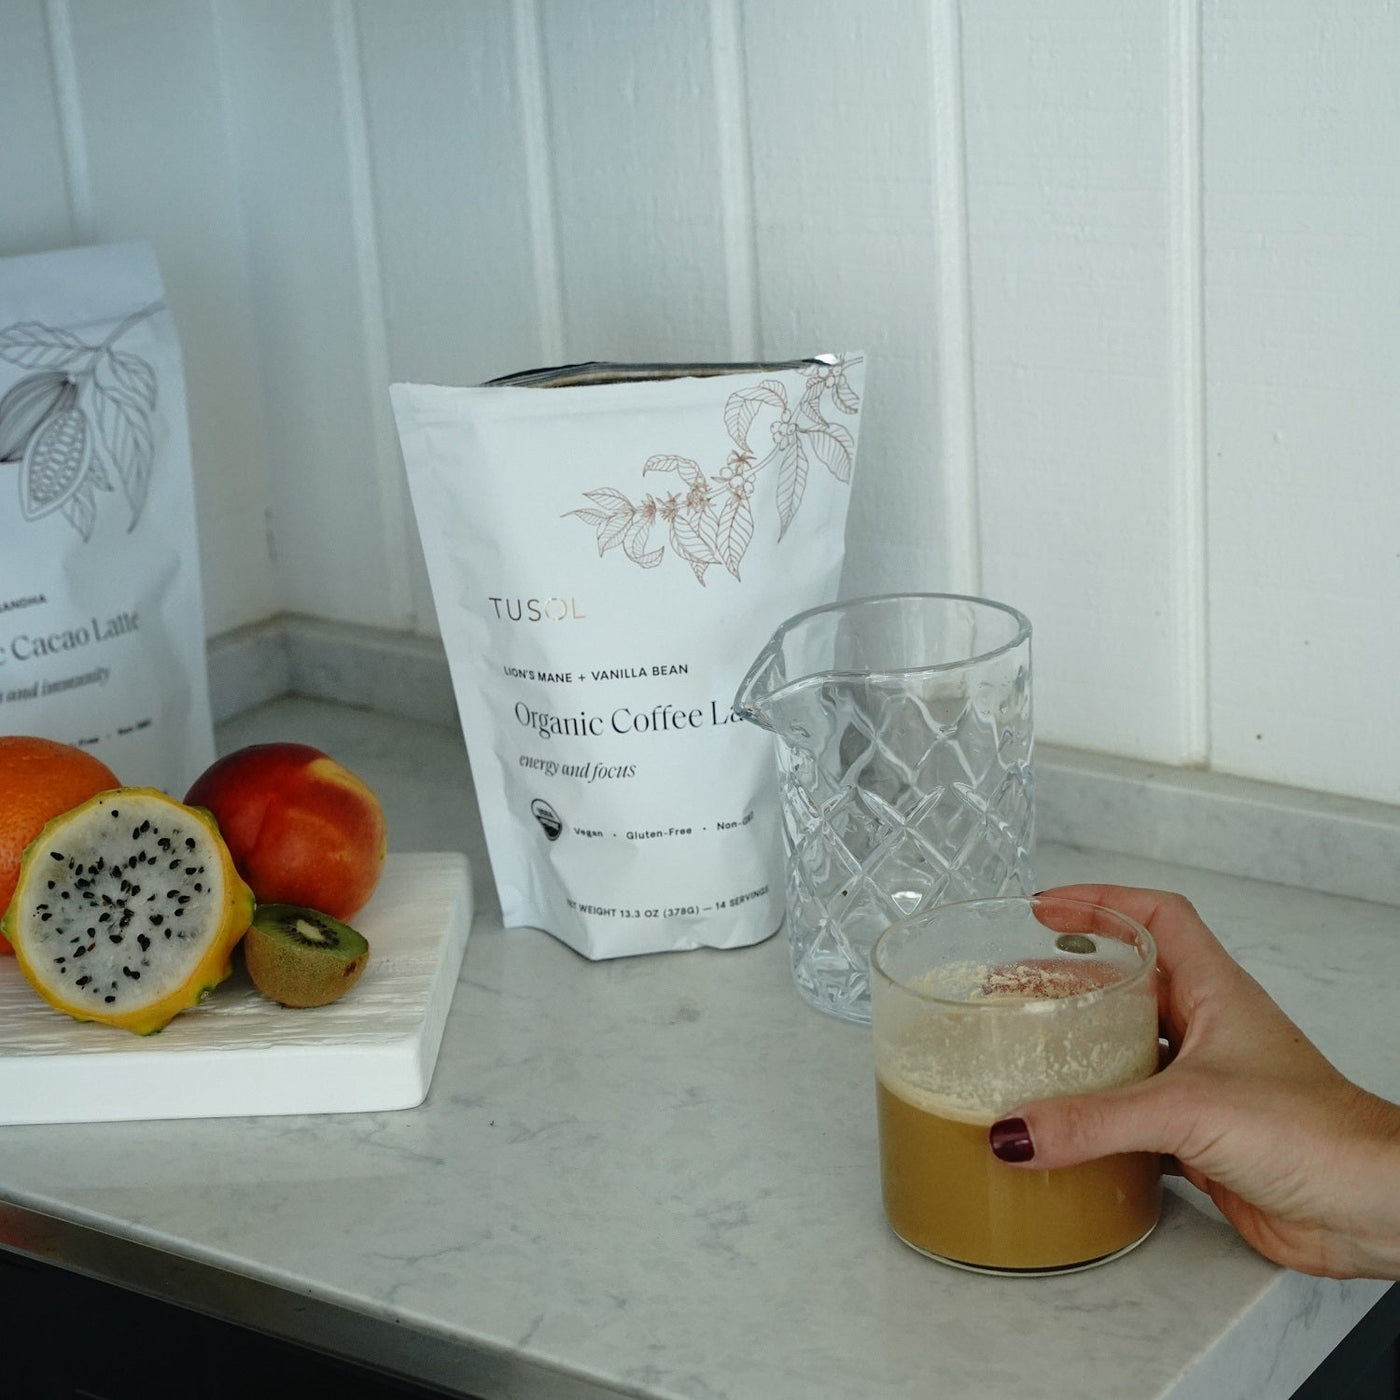 TUSOL Organic Latte Kit